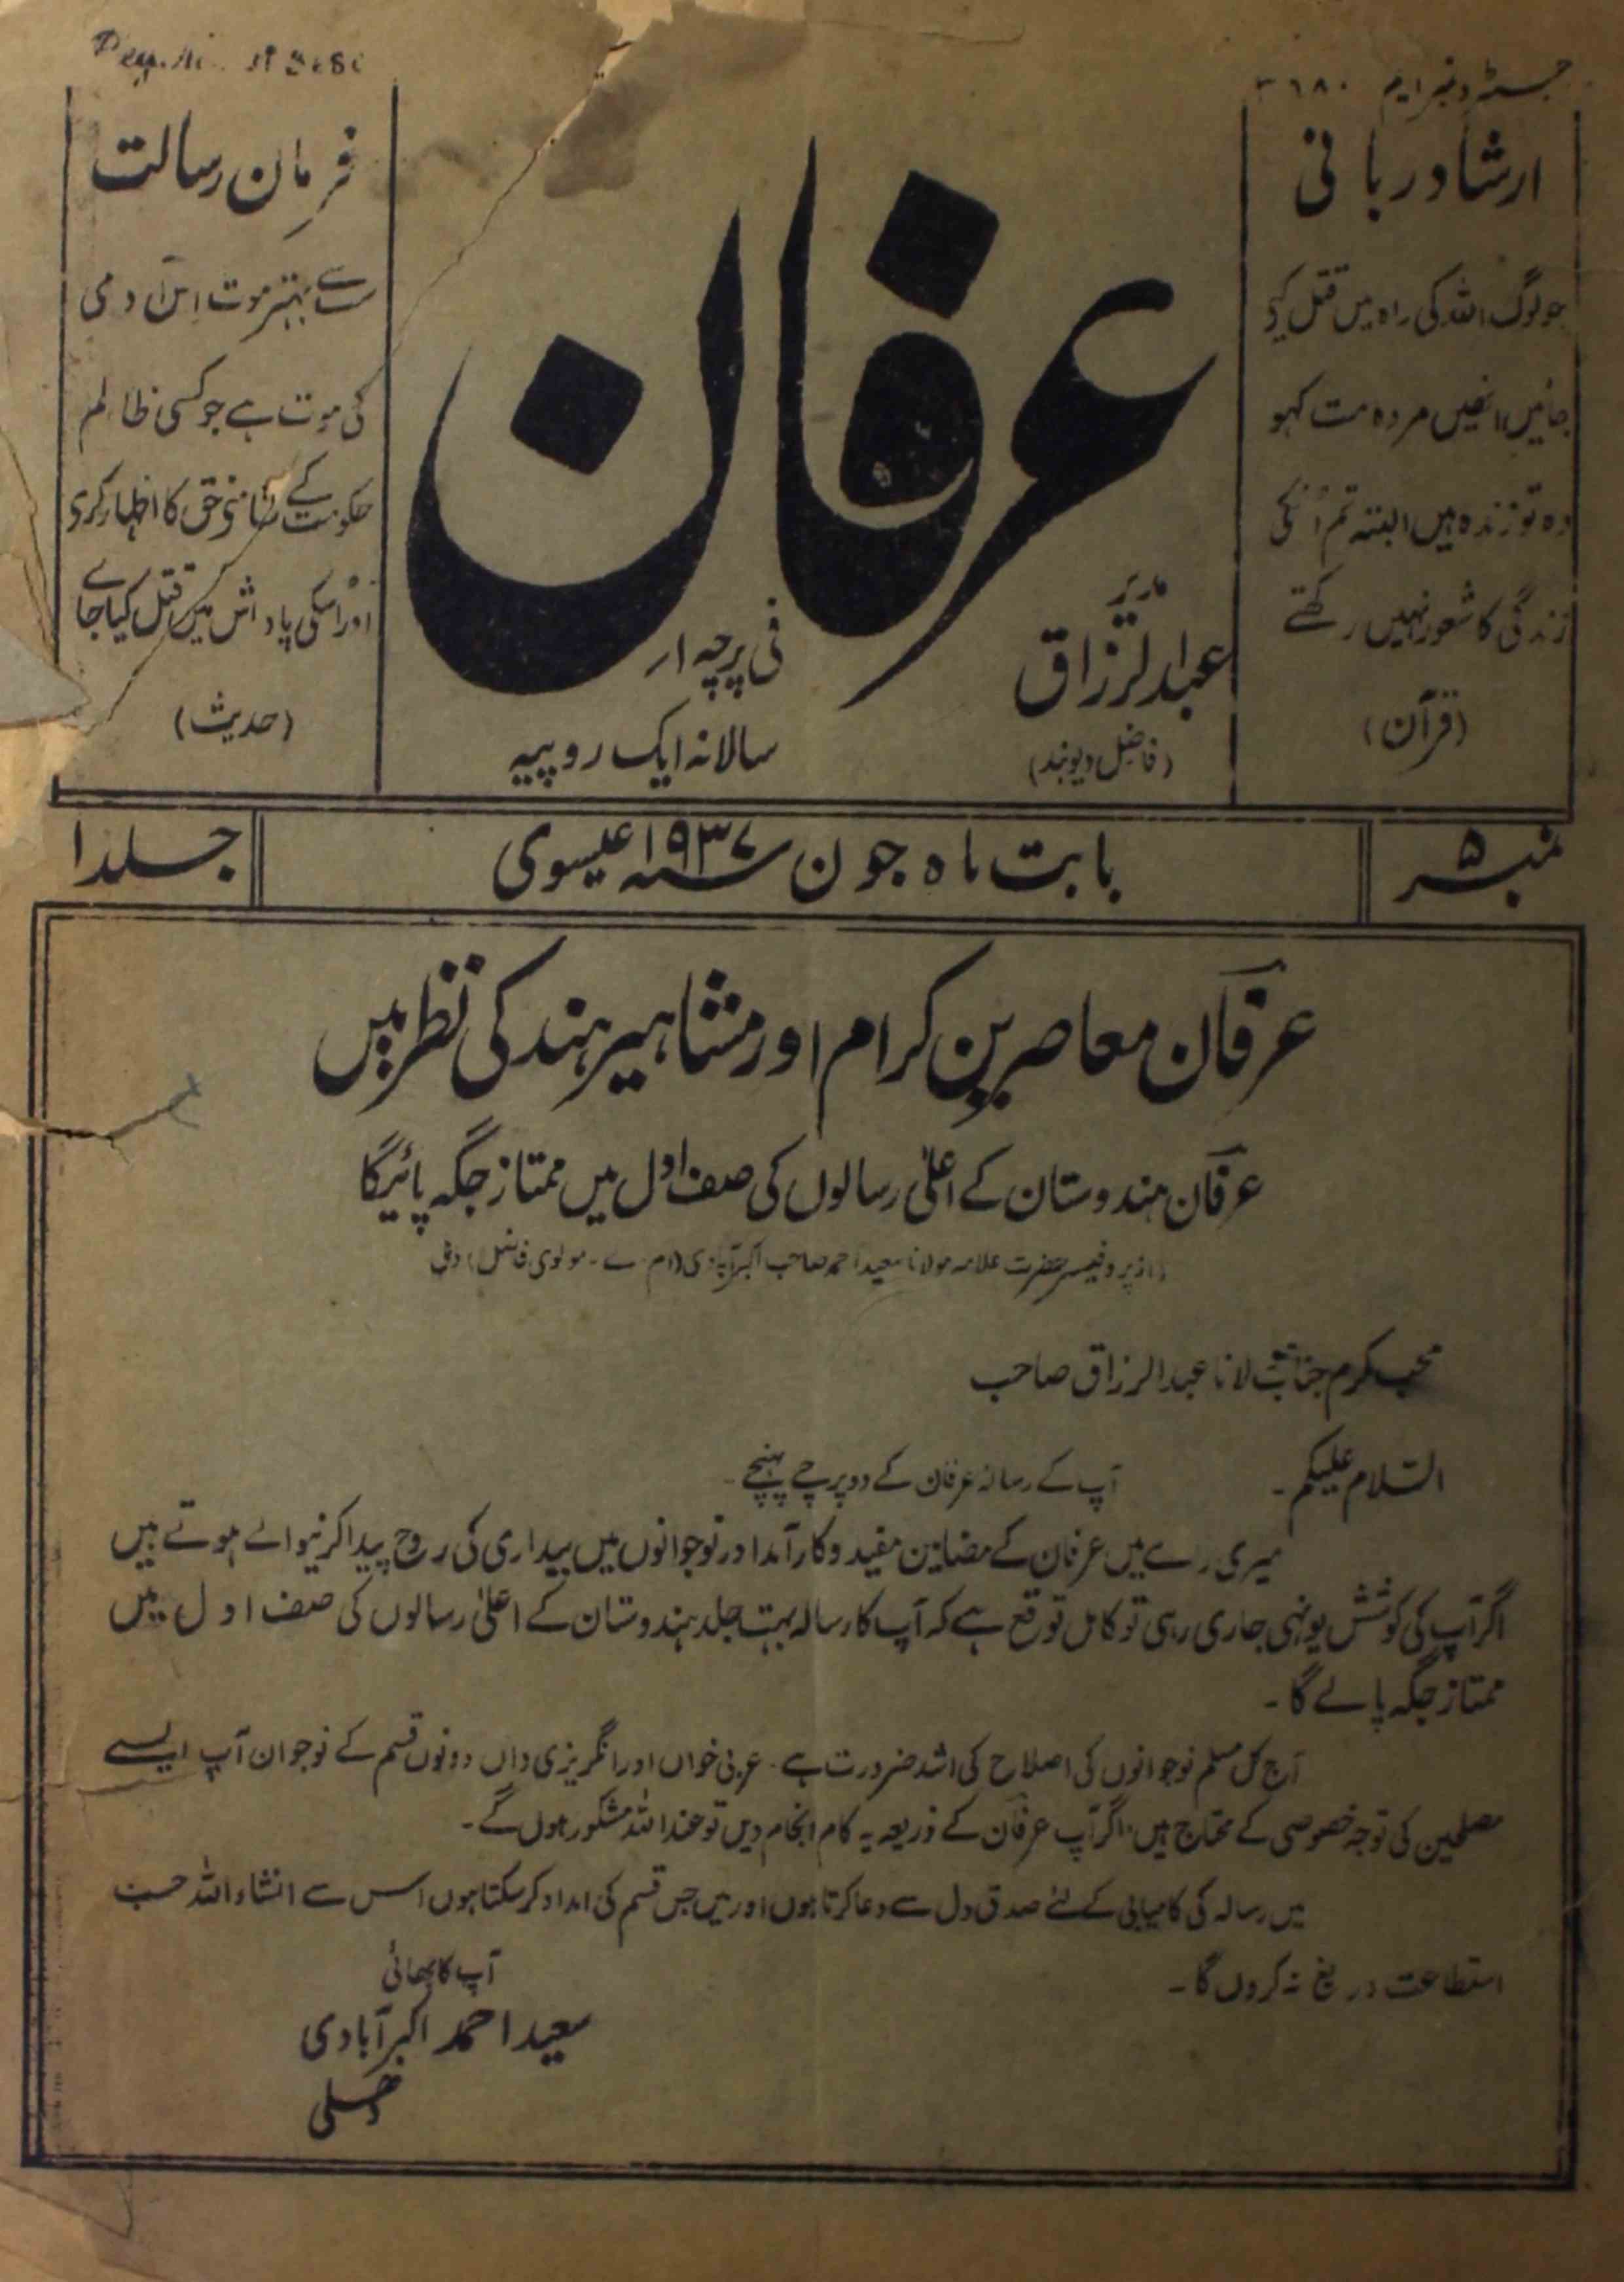 Irfan Jild 1 No 5 June 1937-Svk-Shumara Number-005